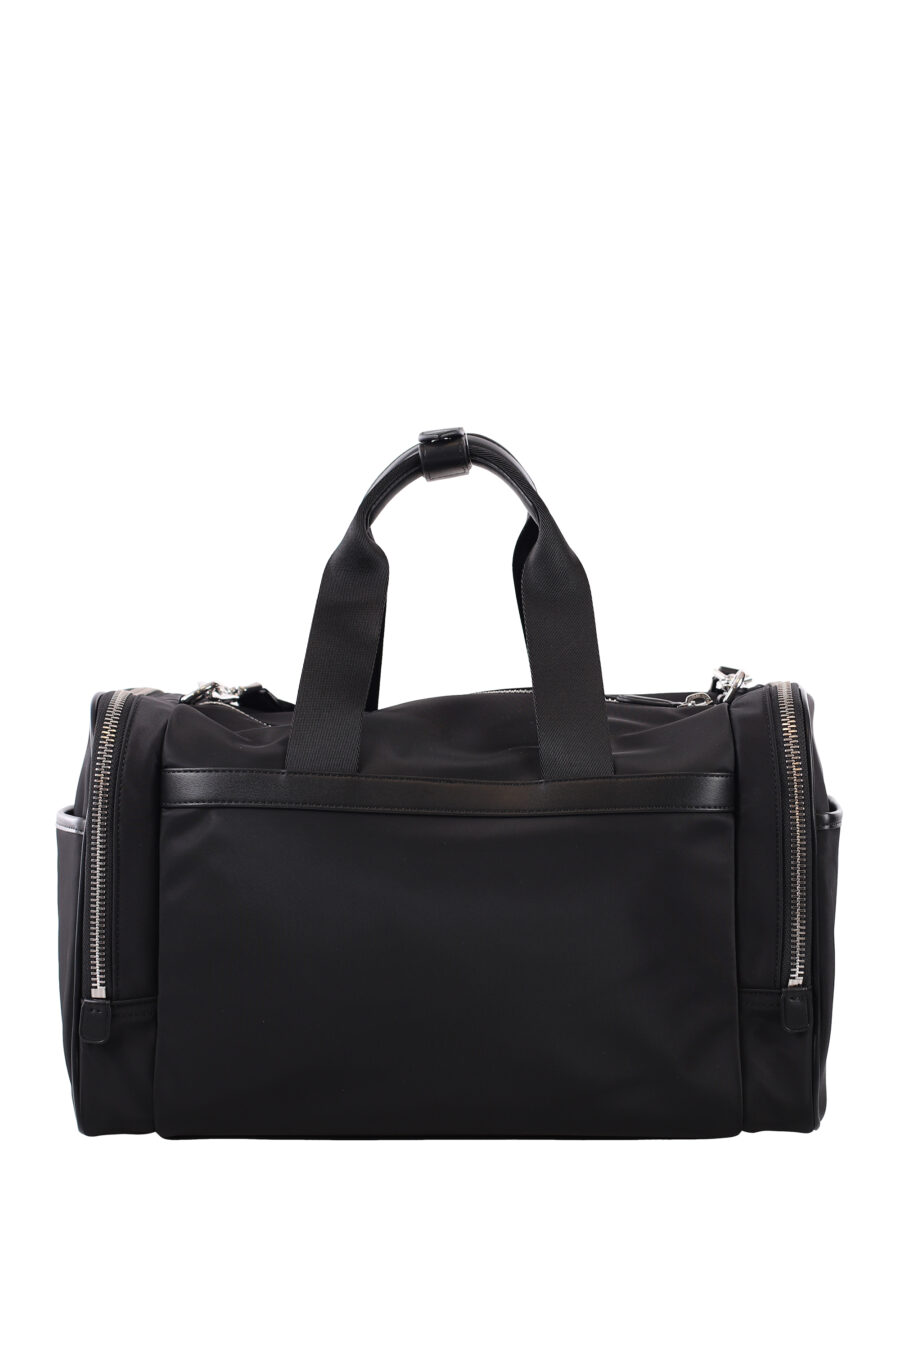 Black travel bag with "rue st-guillaume" logo - IMG 1632